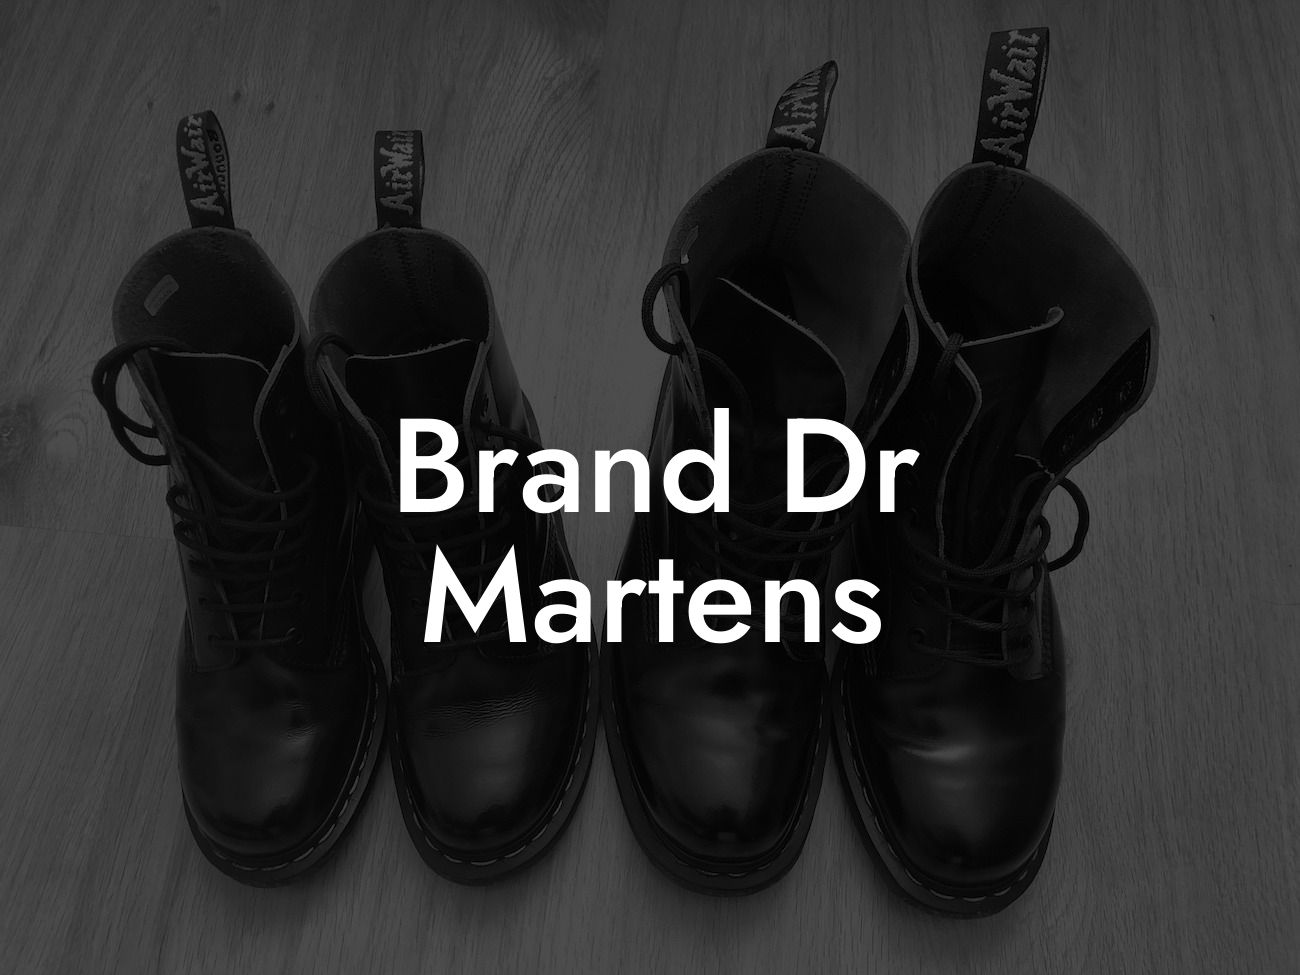 Brand Dr Martens